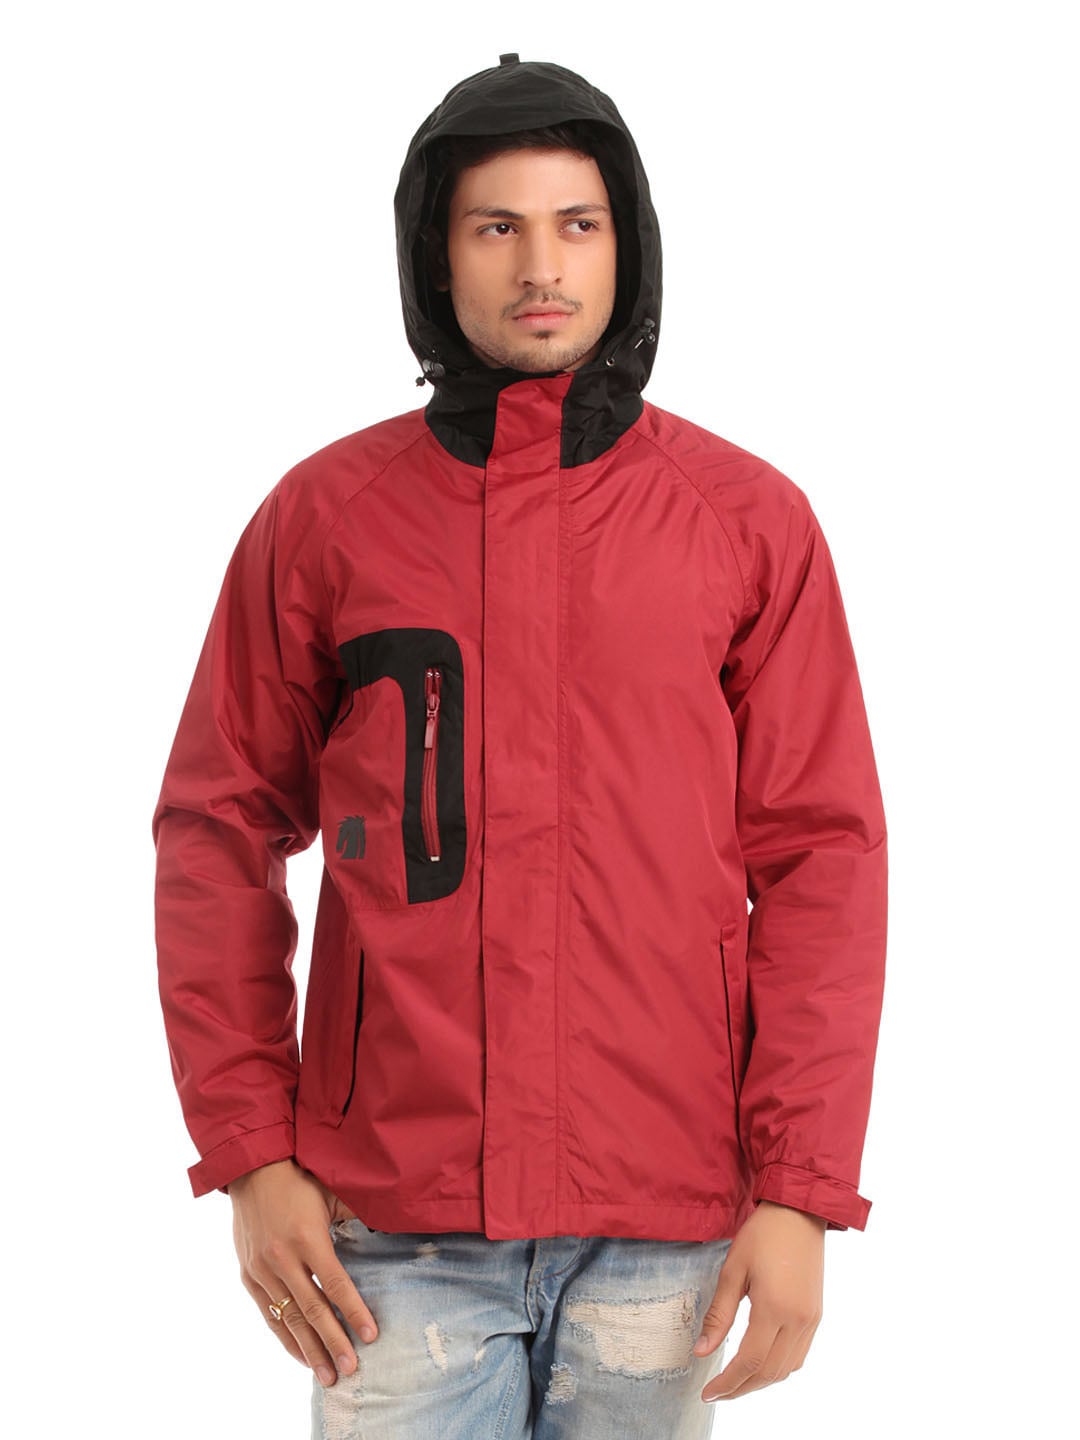 Just Natural Unisex Red Rain Jacket